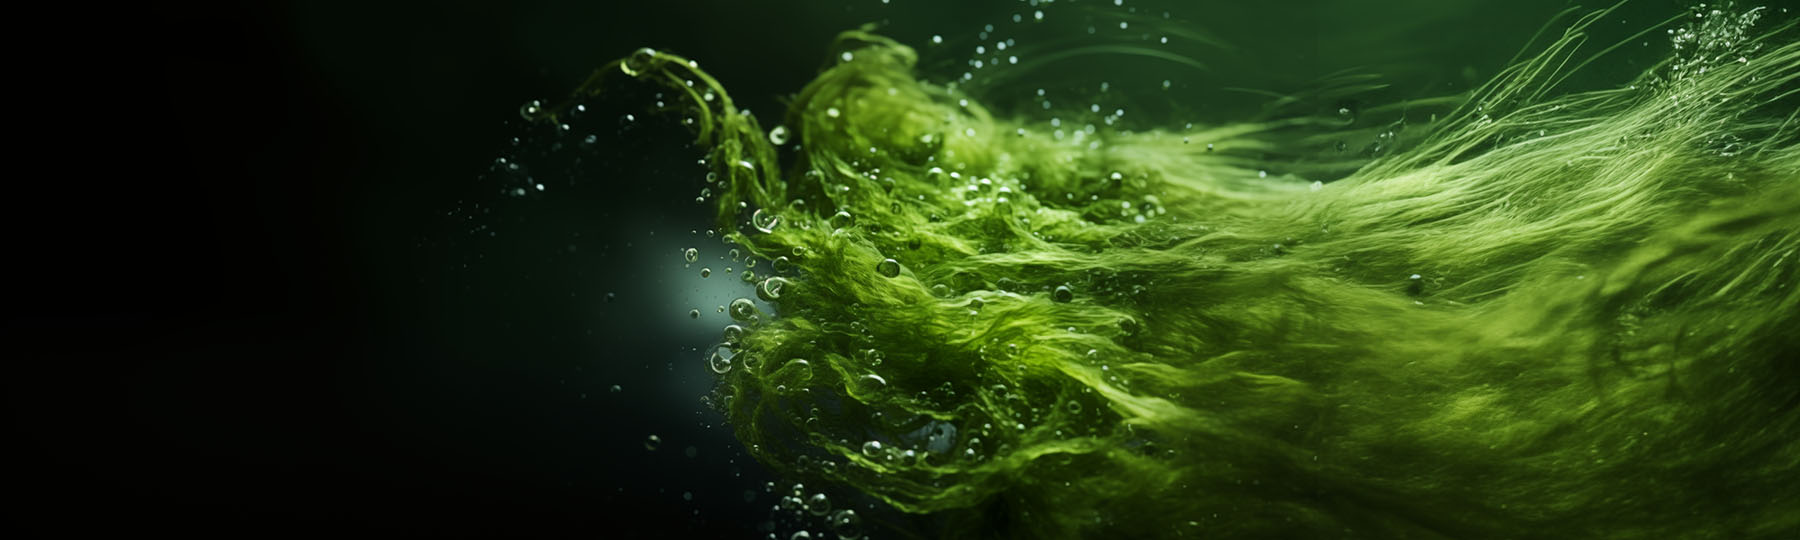 pond-string-algae-header